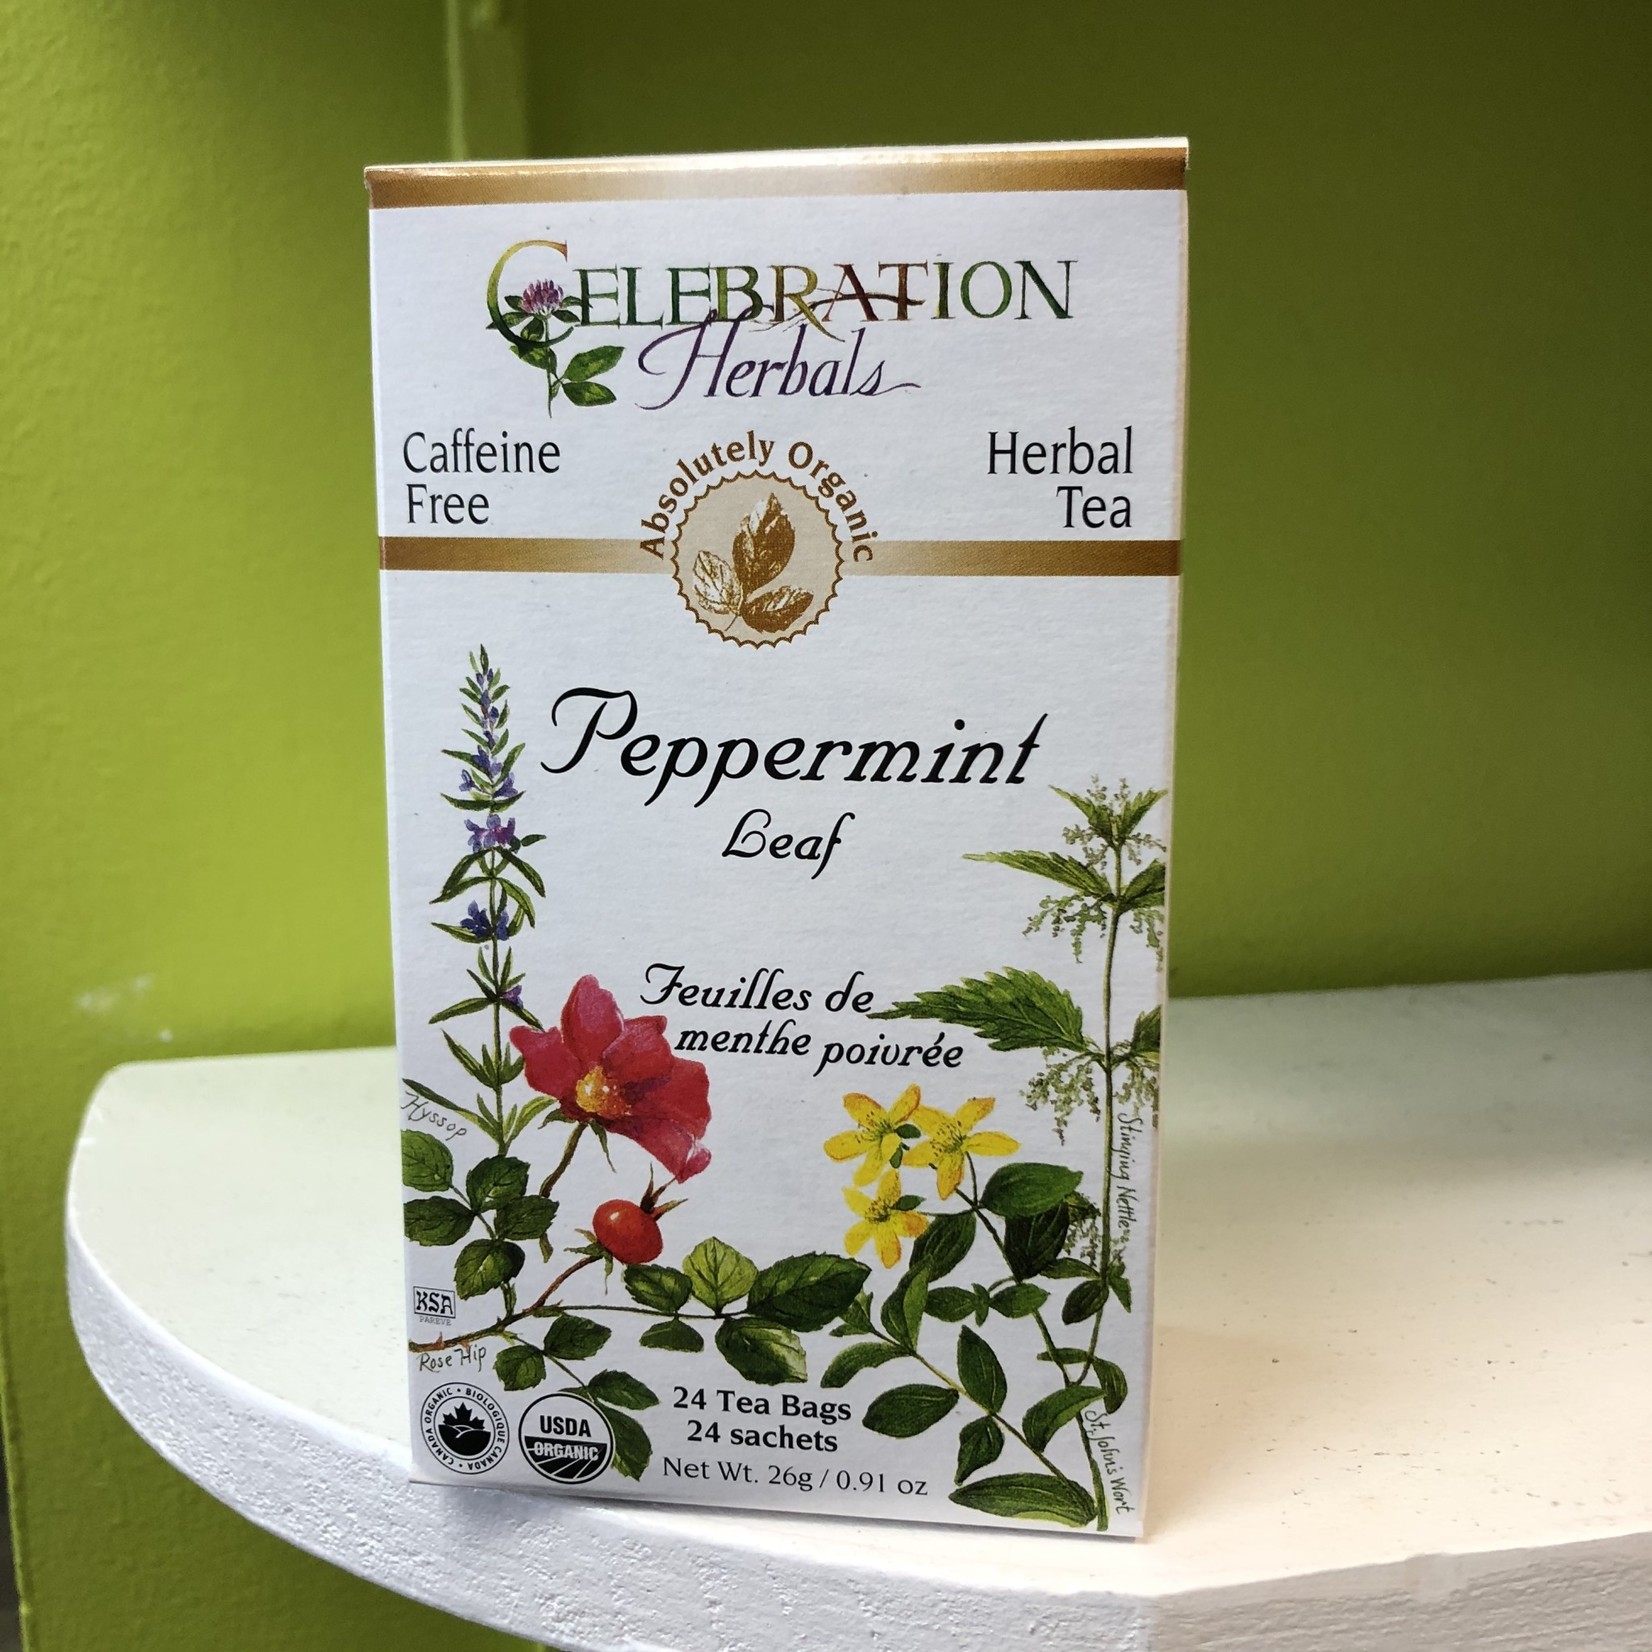 Celebration Herbals Celebration Herbals Peppermint Leaf Tea 24 Tea Bags